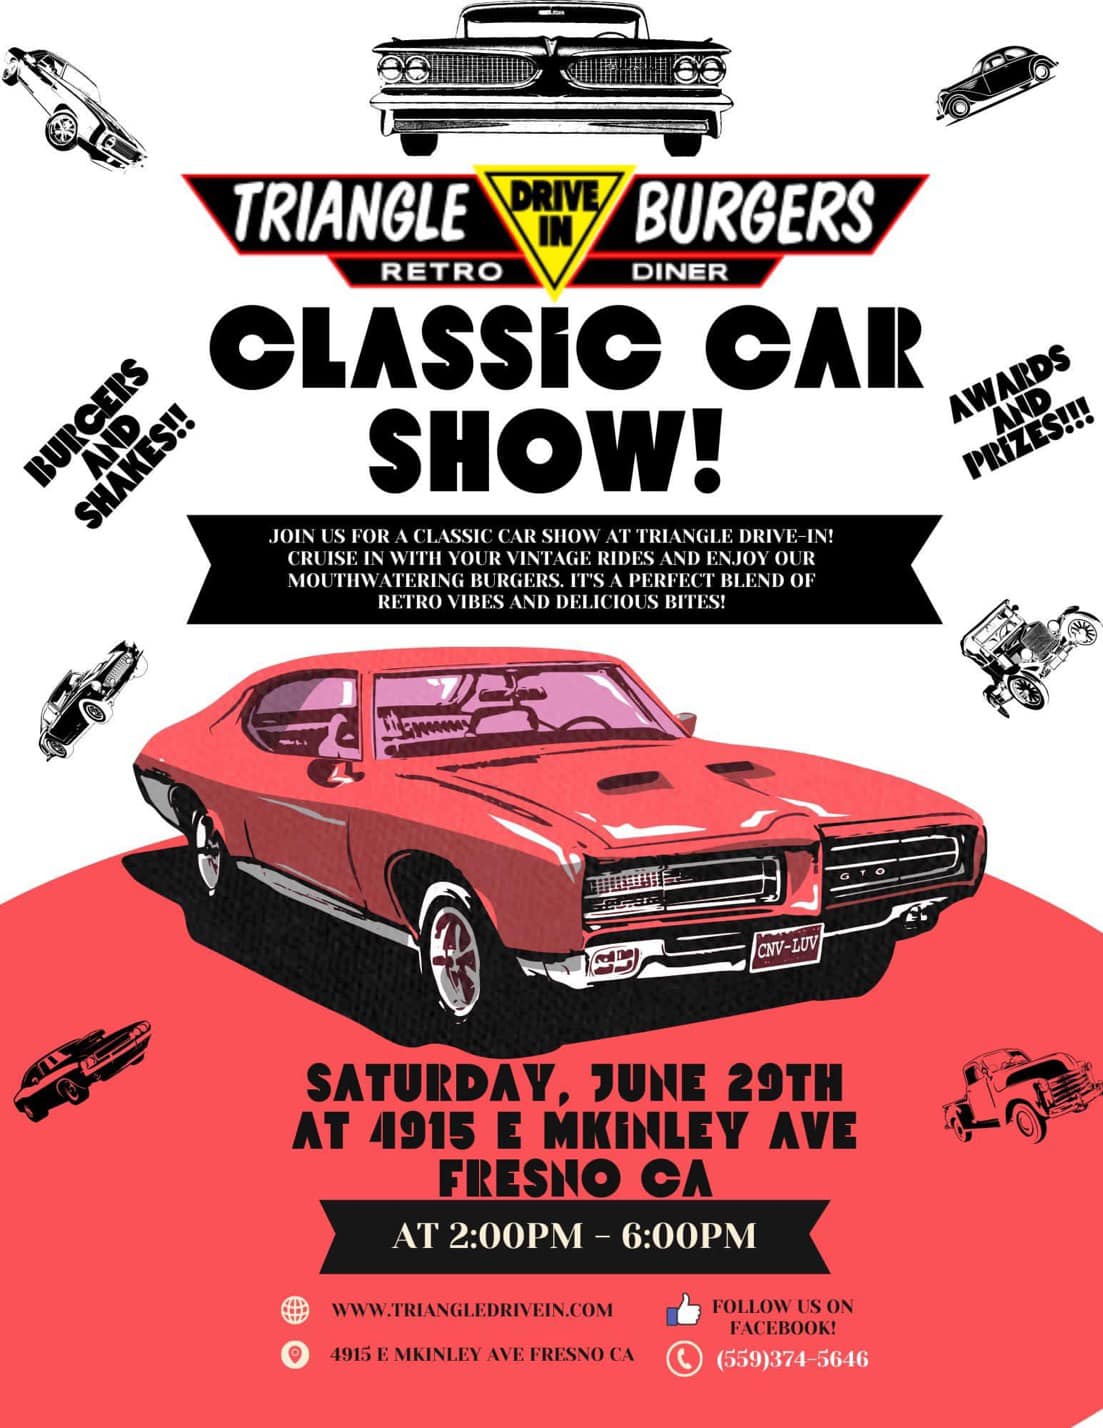 Triangle Drive In Classic Car Show